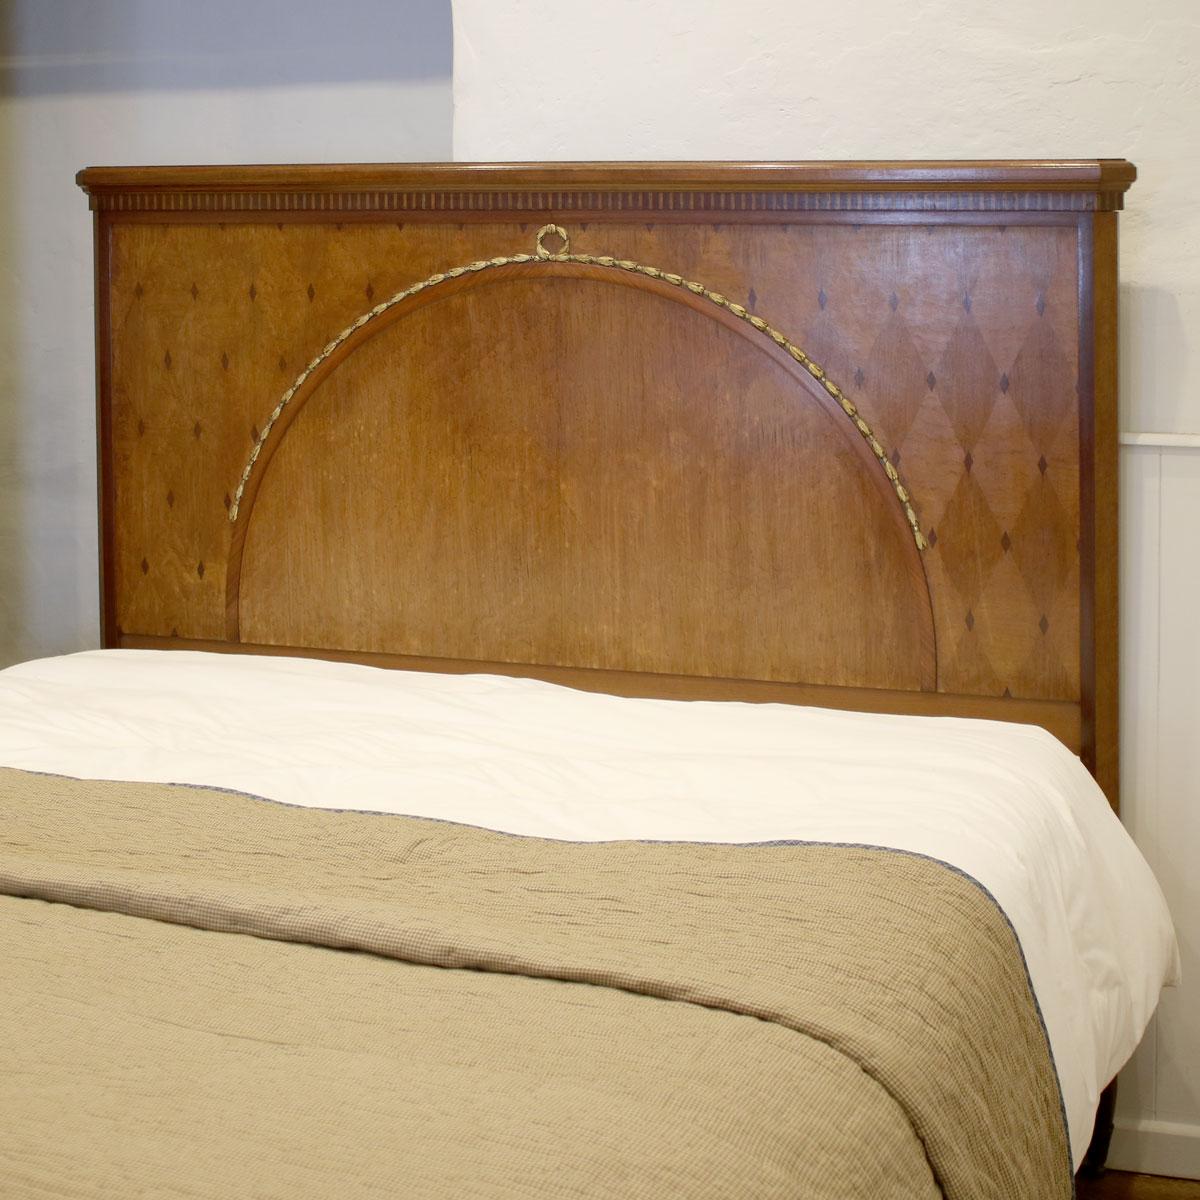 1950s mahogany bedroom furniture